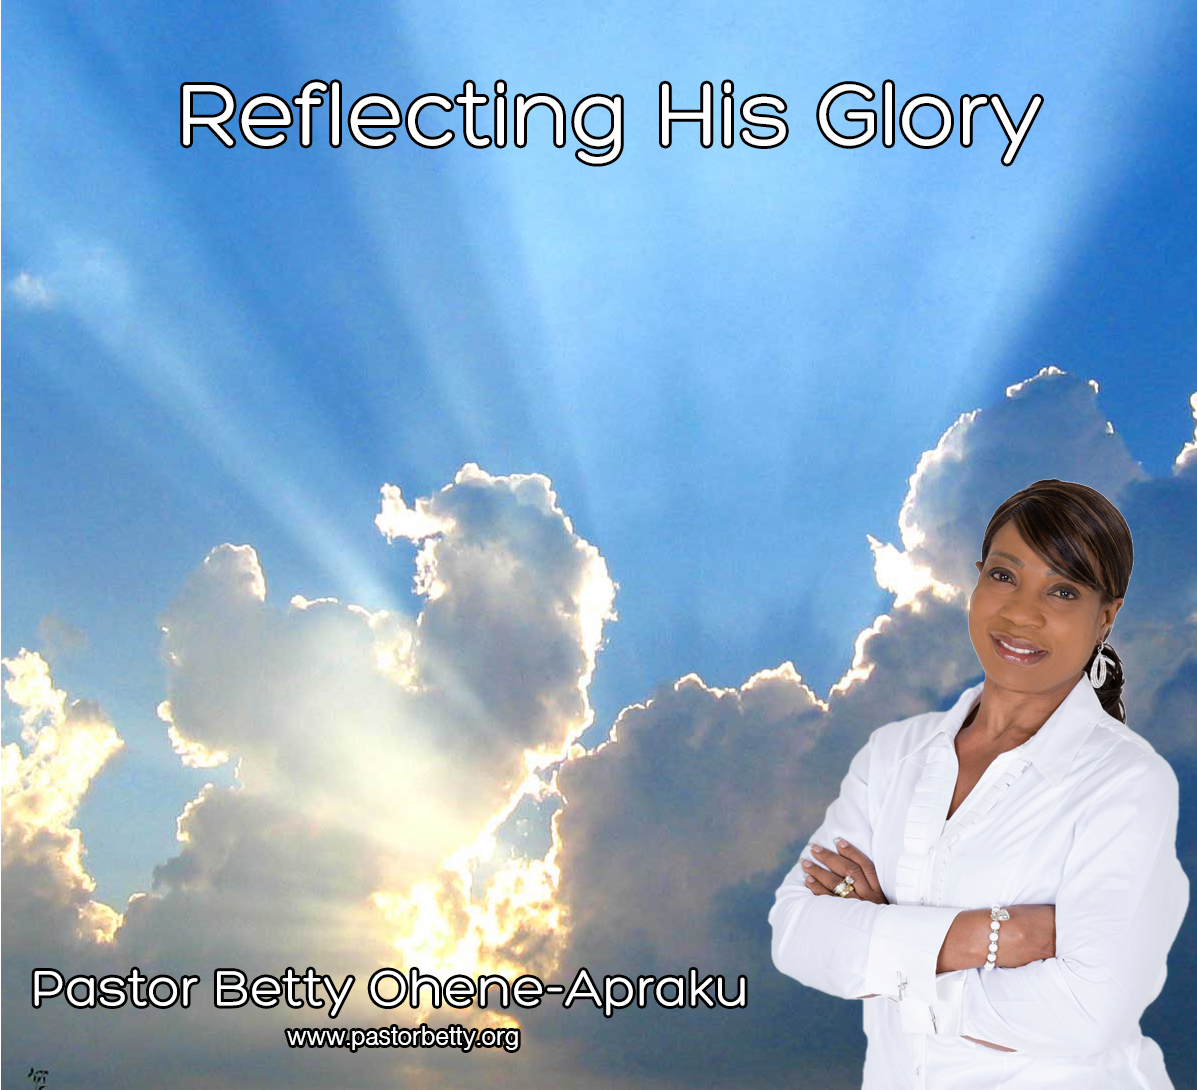 Reflecting His Glory DVD - Video DVD